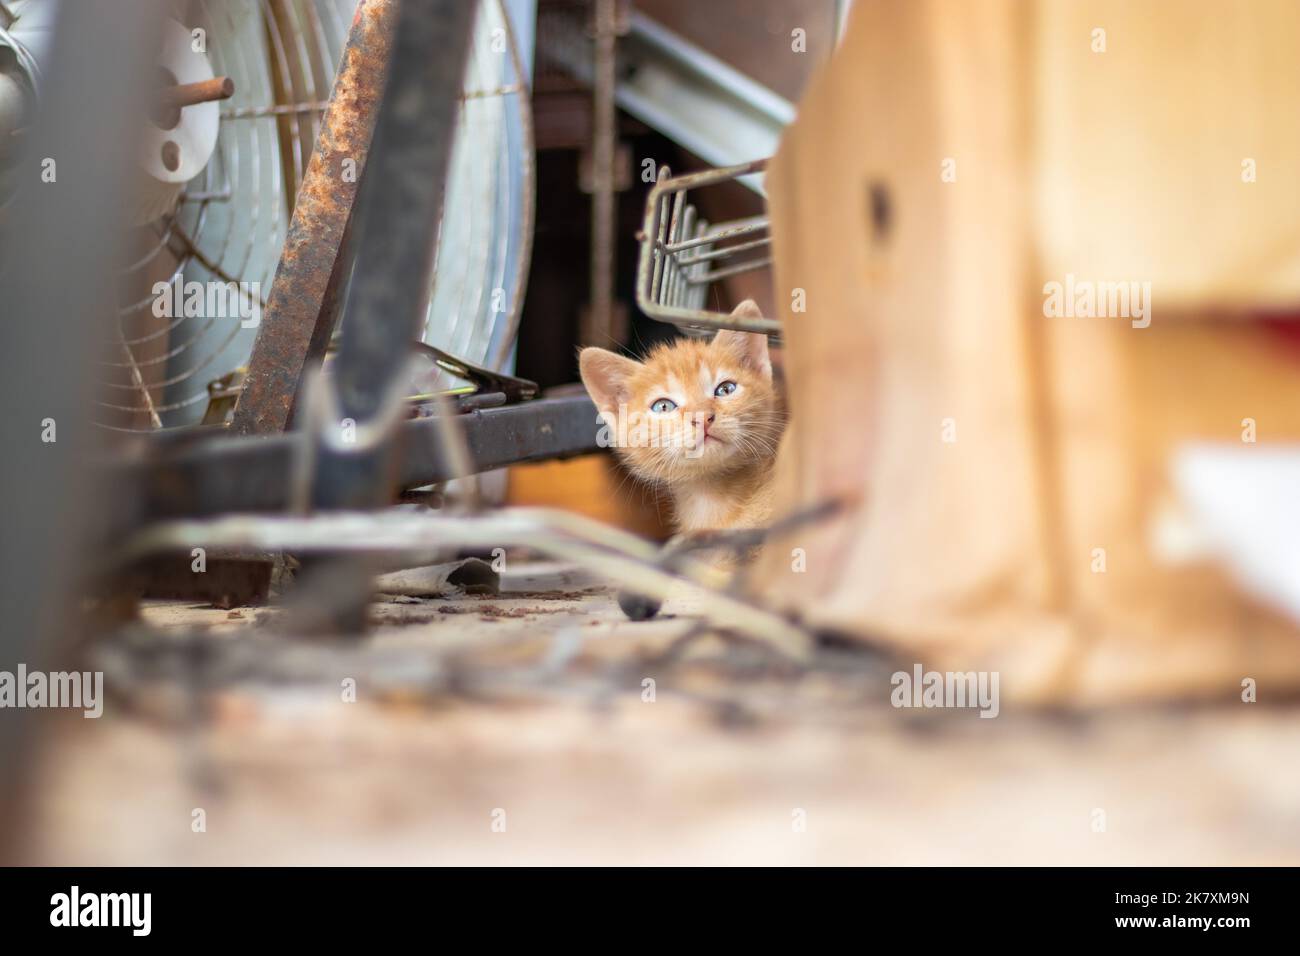 Cute little orange baby cat hiding between boxes Stock Photo